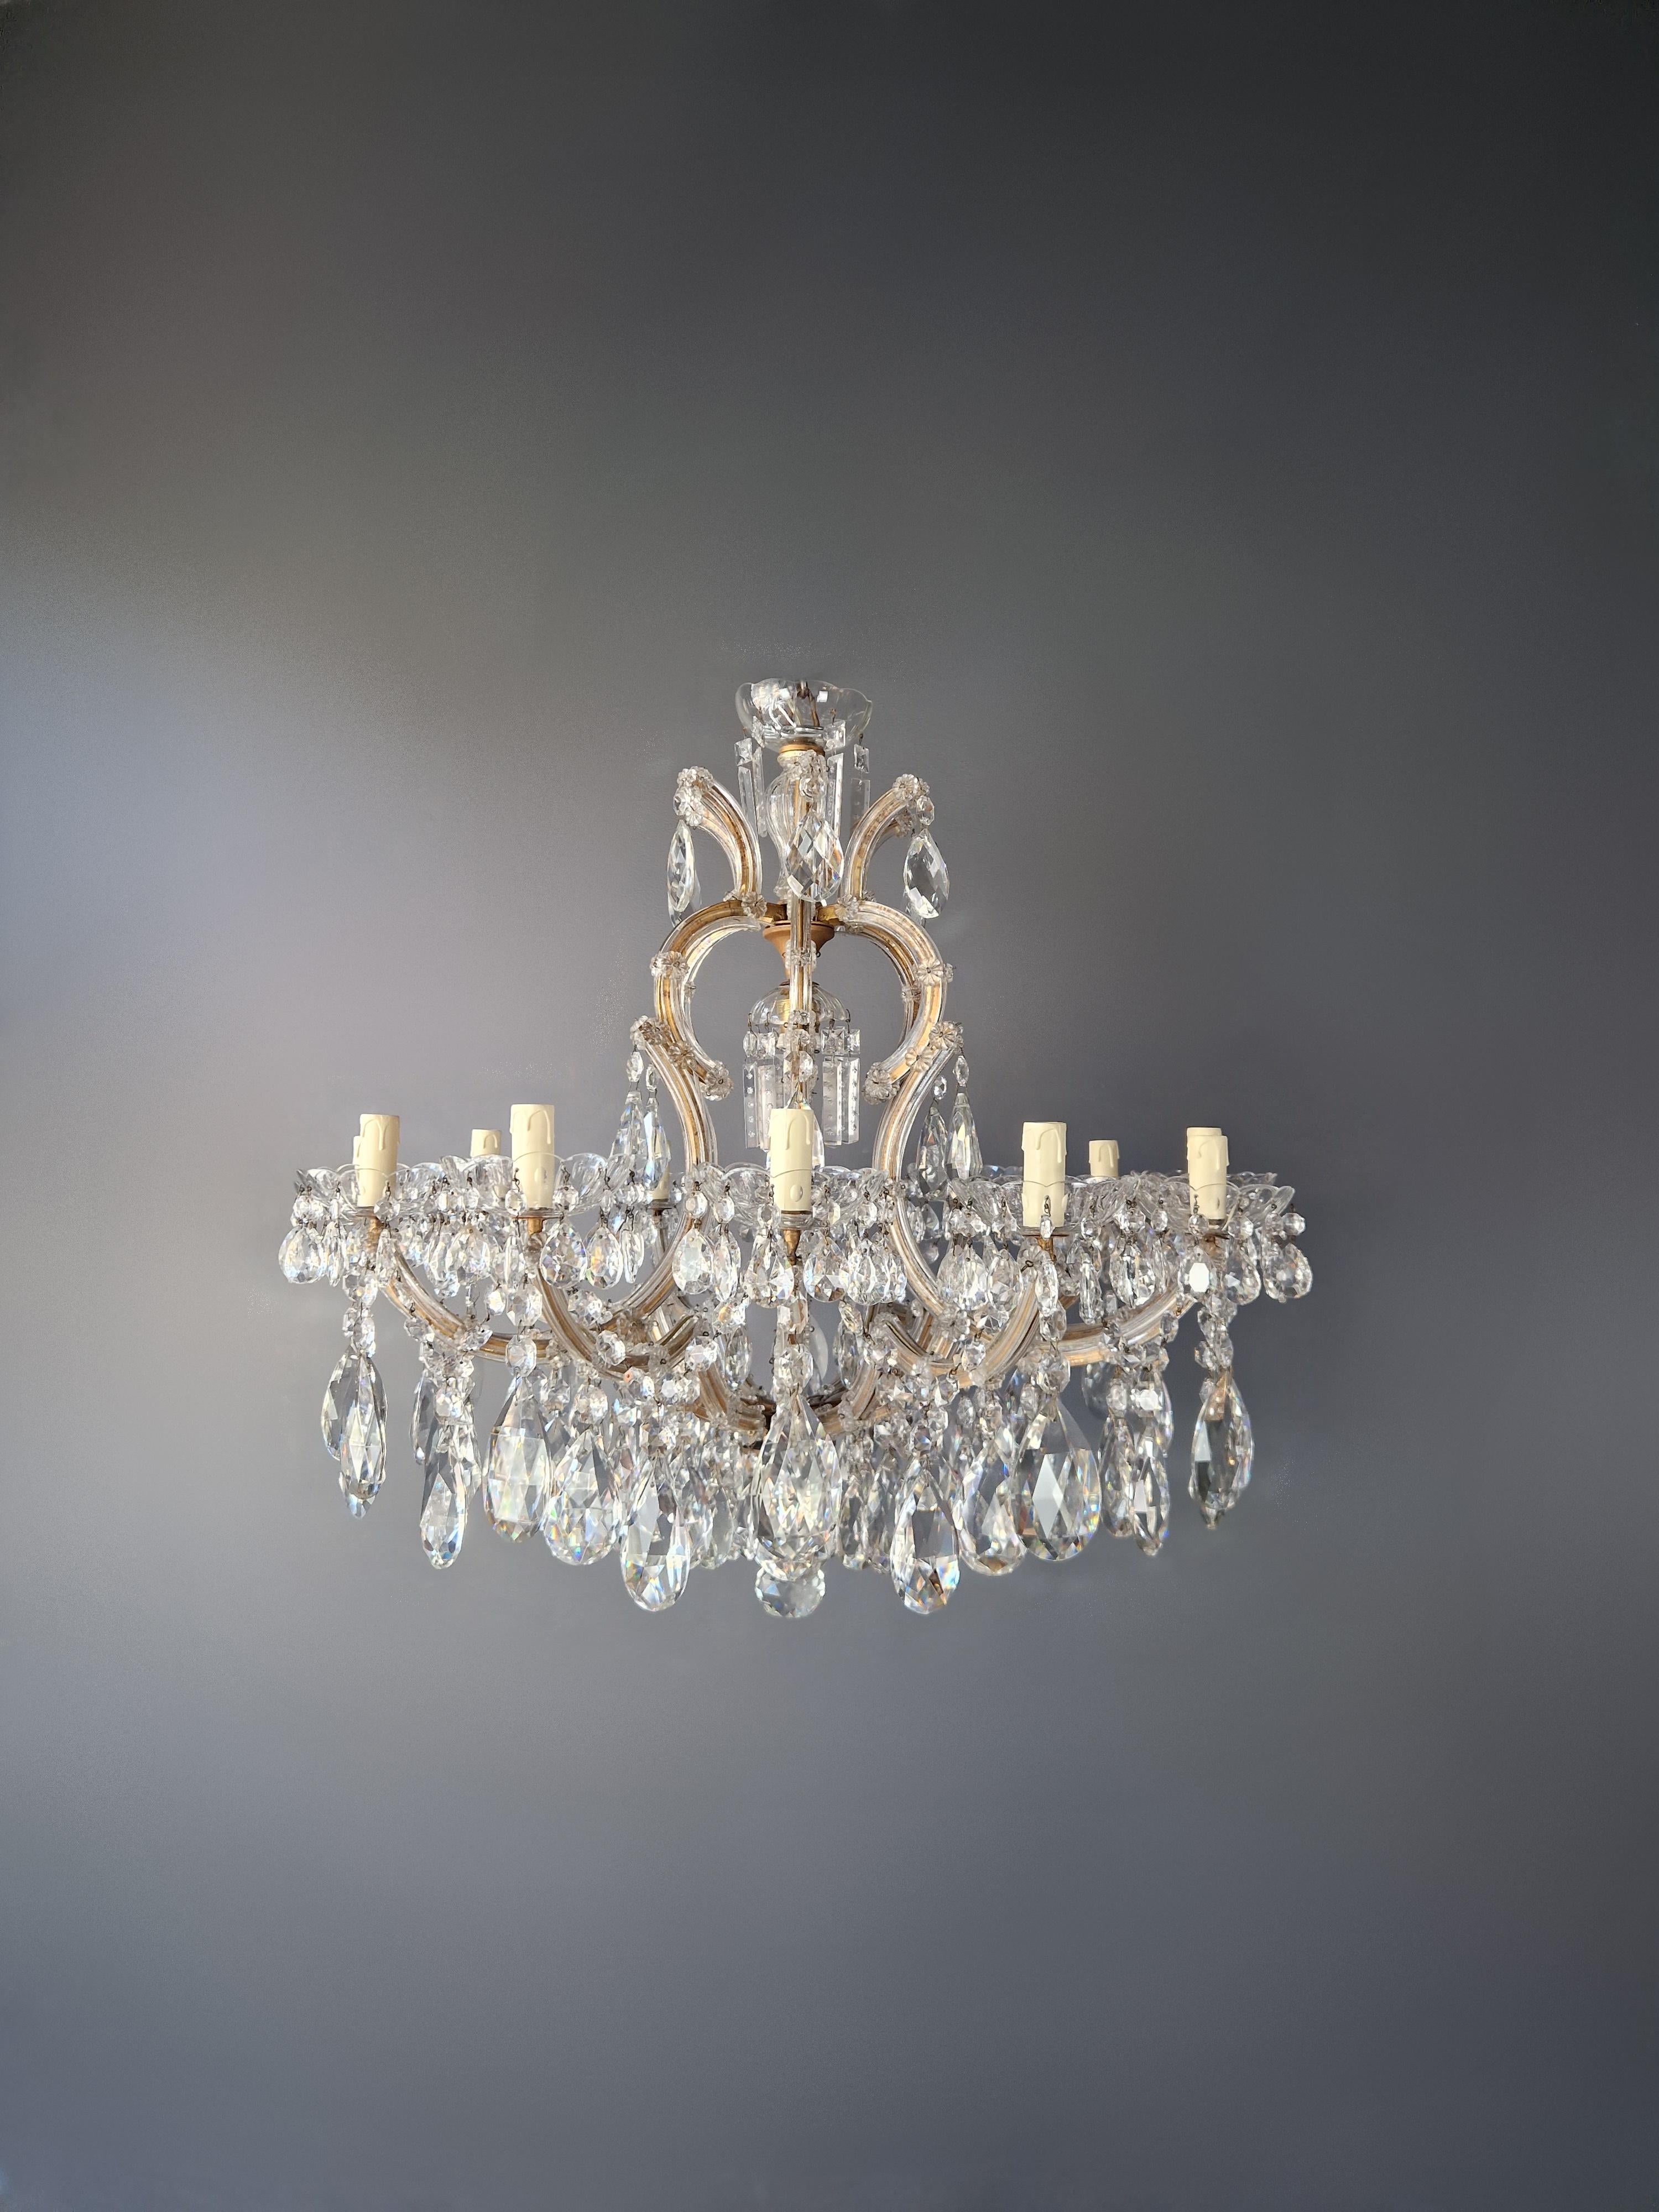 European 1930s Art Nouveau Maria Theresa Crystal Chandelier lustre Brass Glass  For Sale